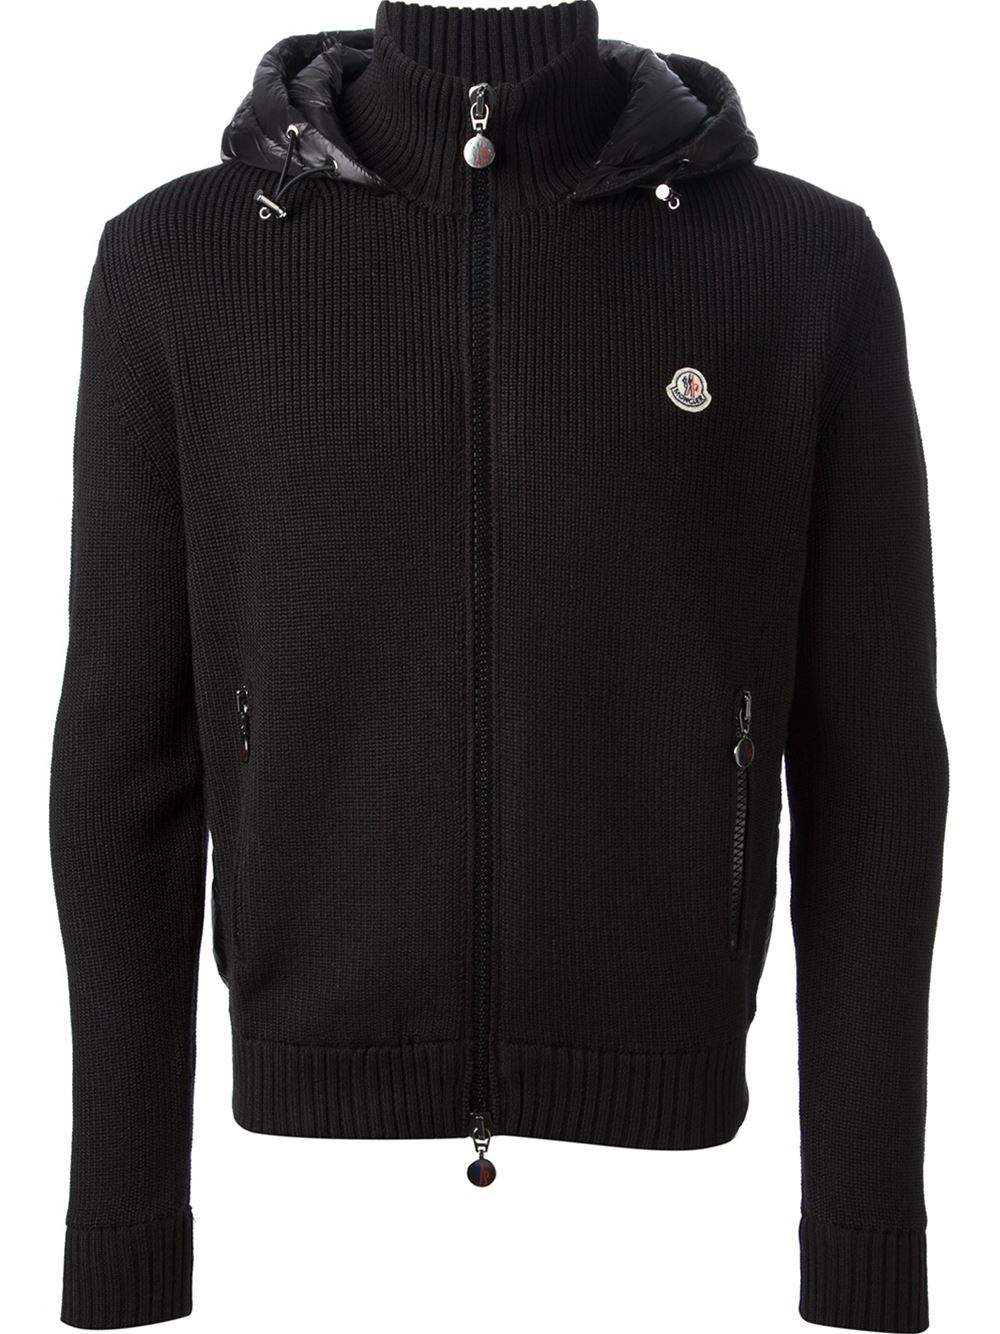 Lyst - Moncler Padded Zip Sweater in Black for Men